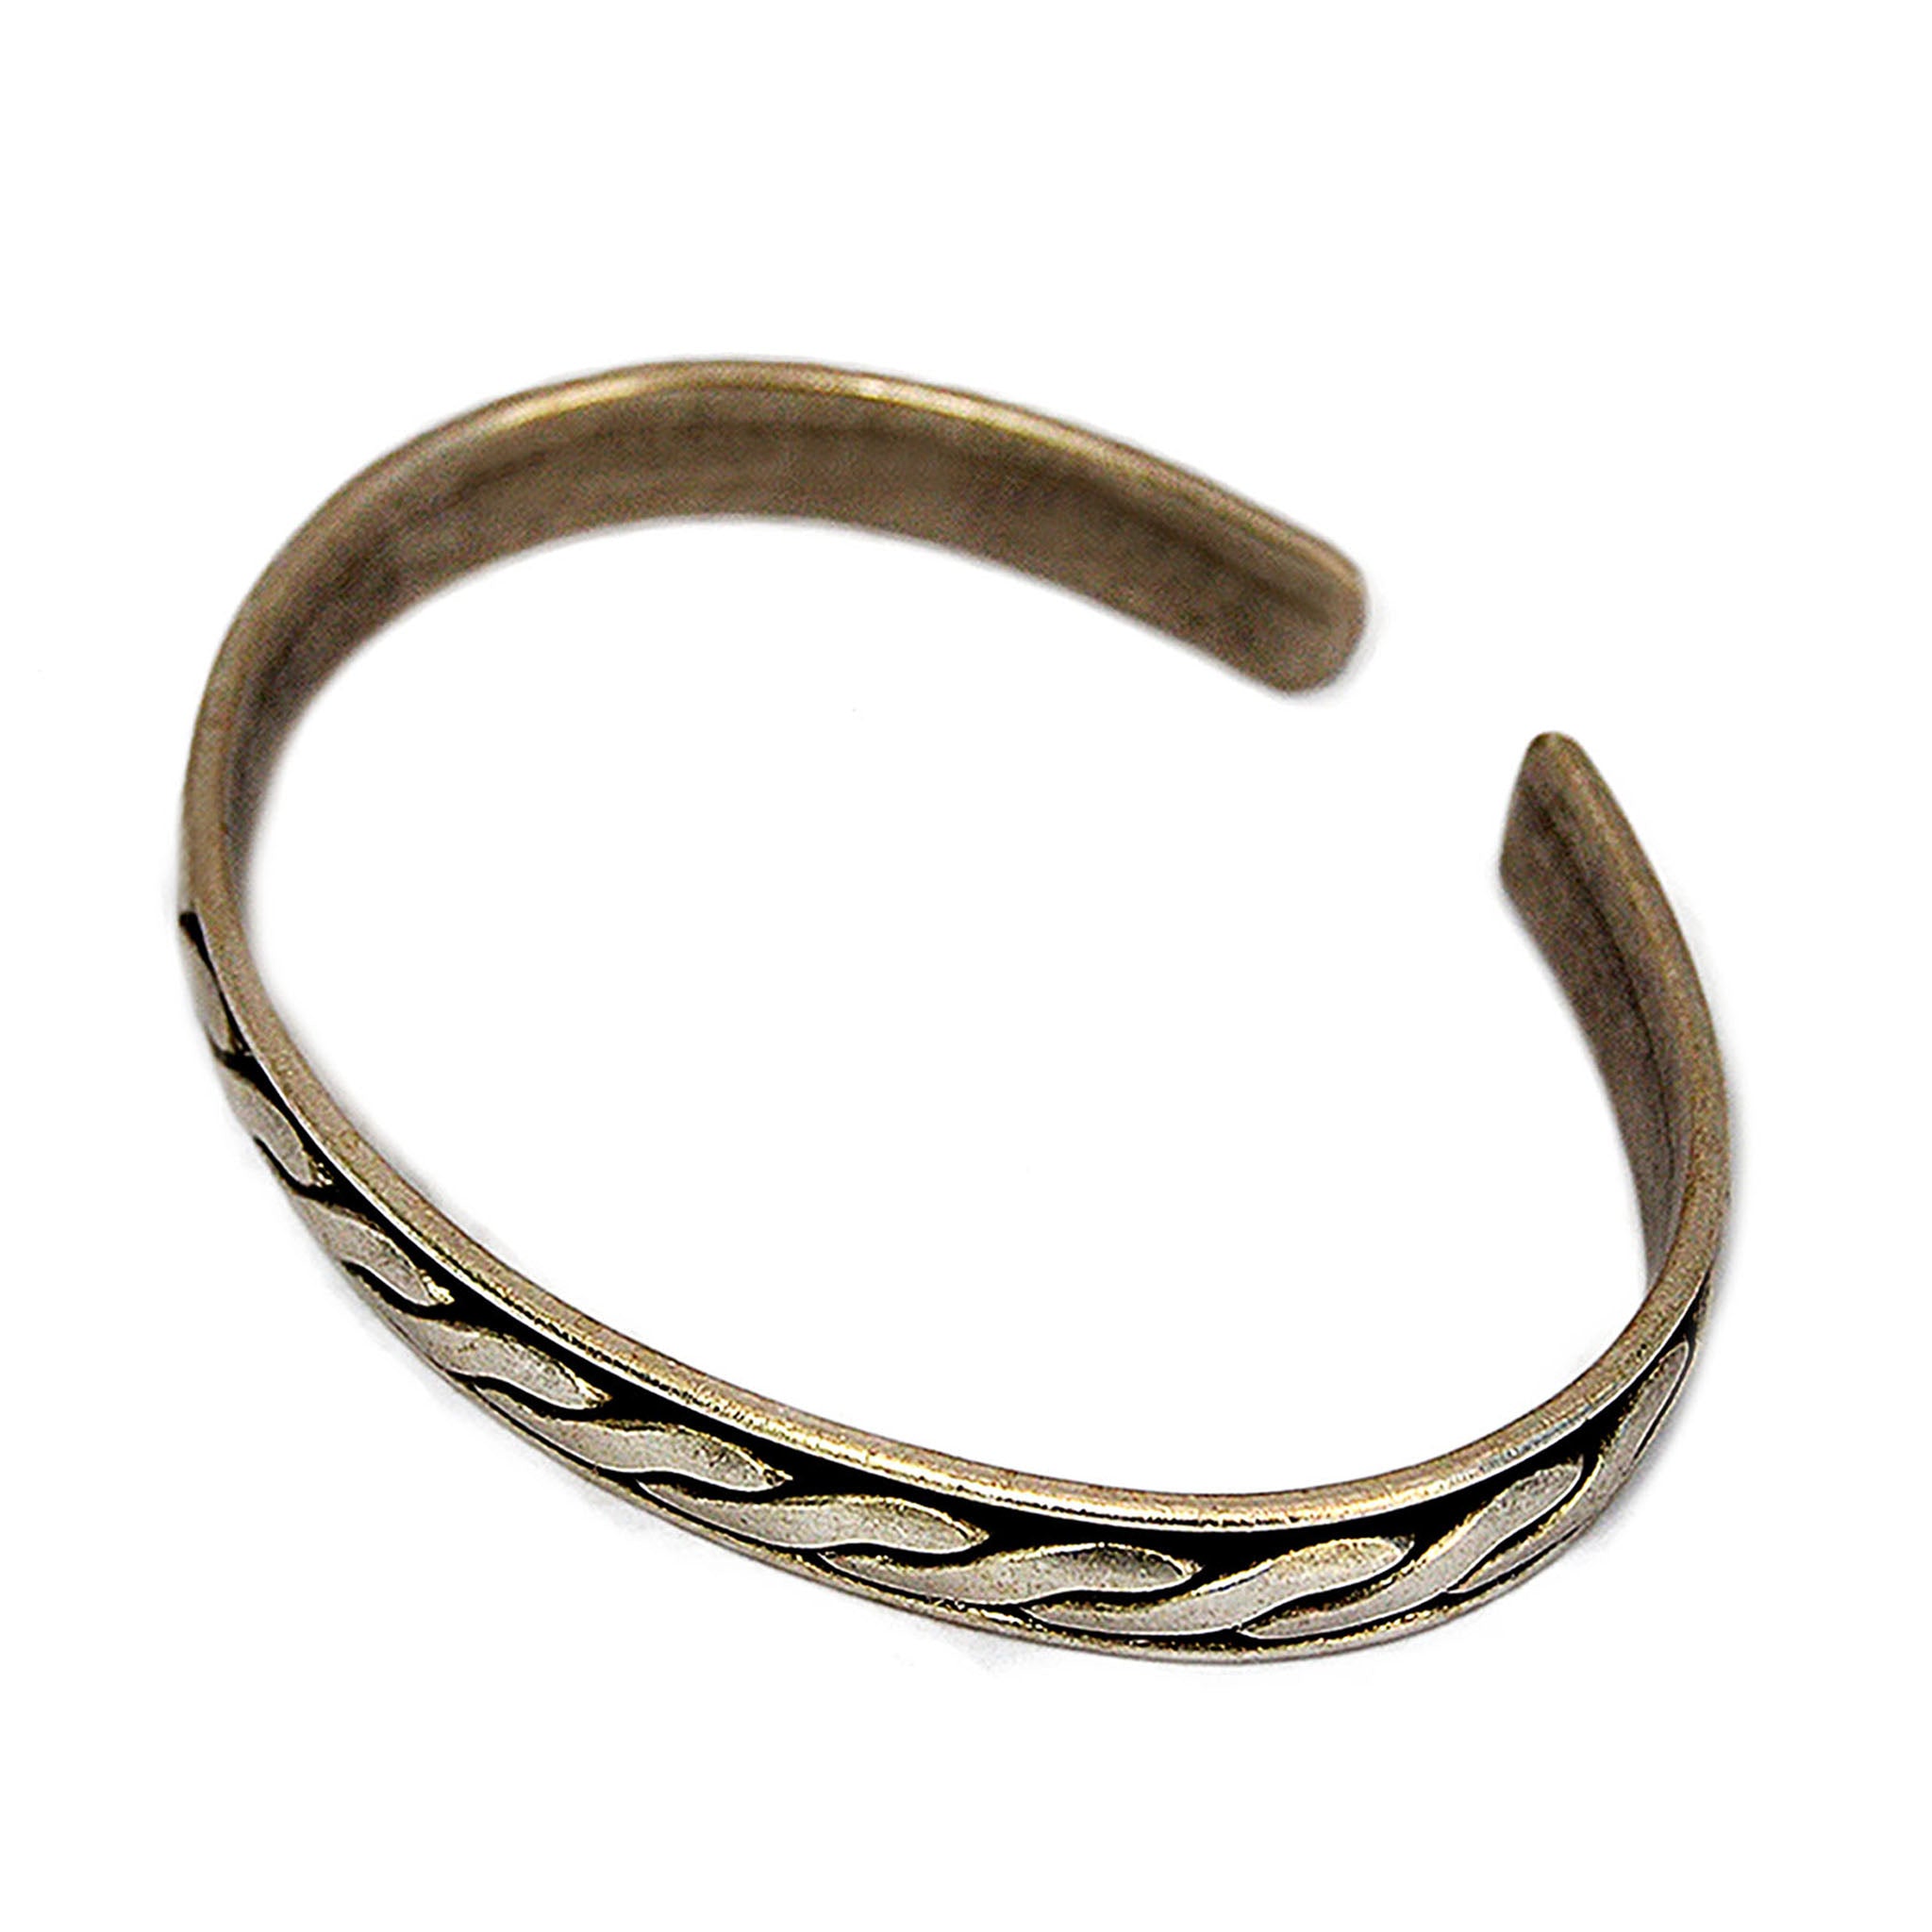 Unisex braided bracelet